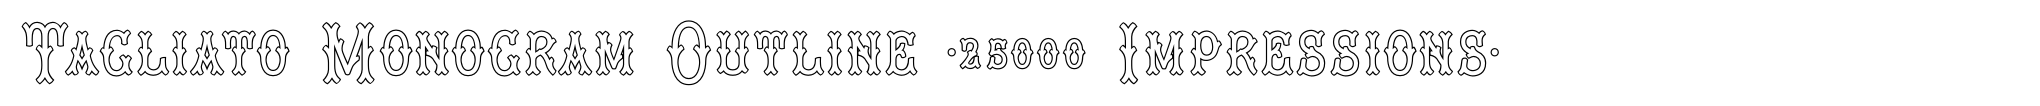 Tagliato Monogram Outline (25000 Impressions) image